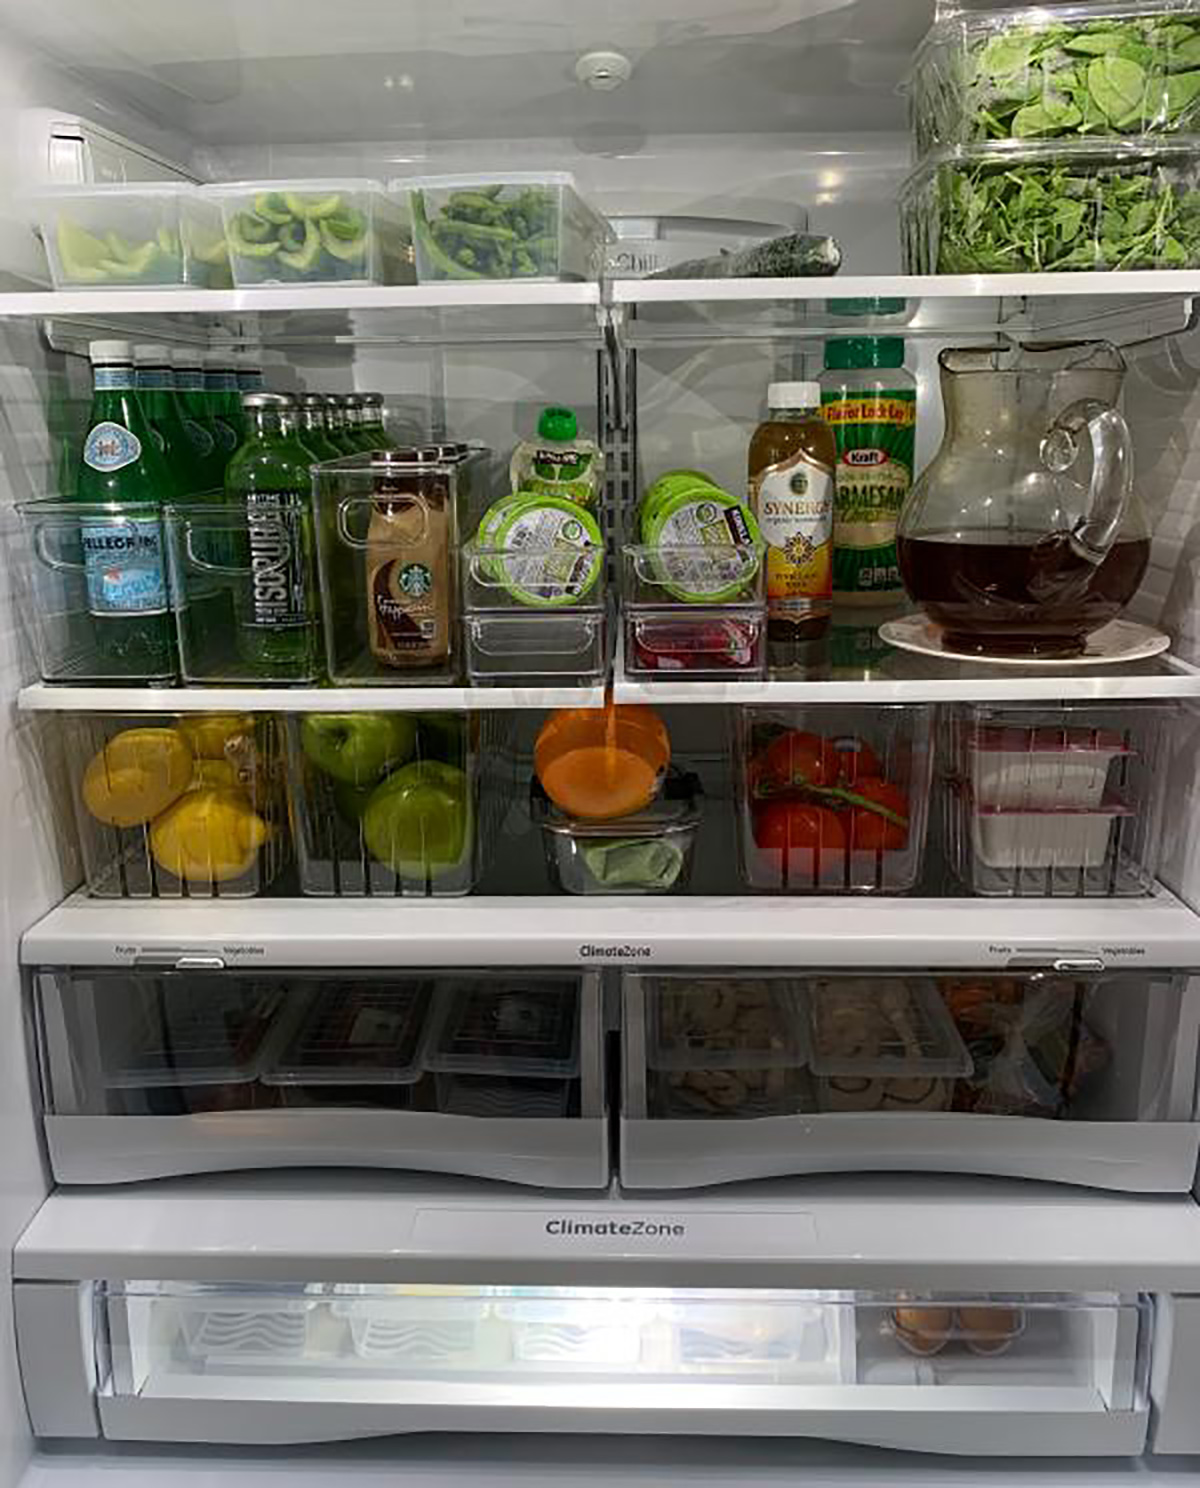 ge fridge open with organized foods